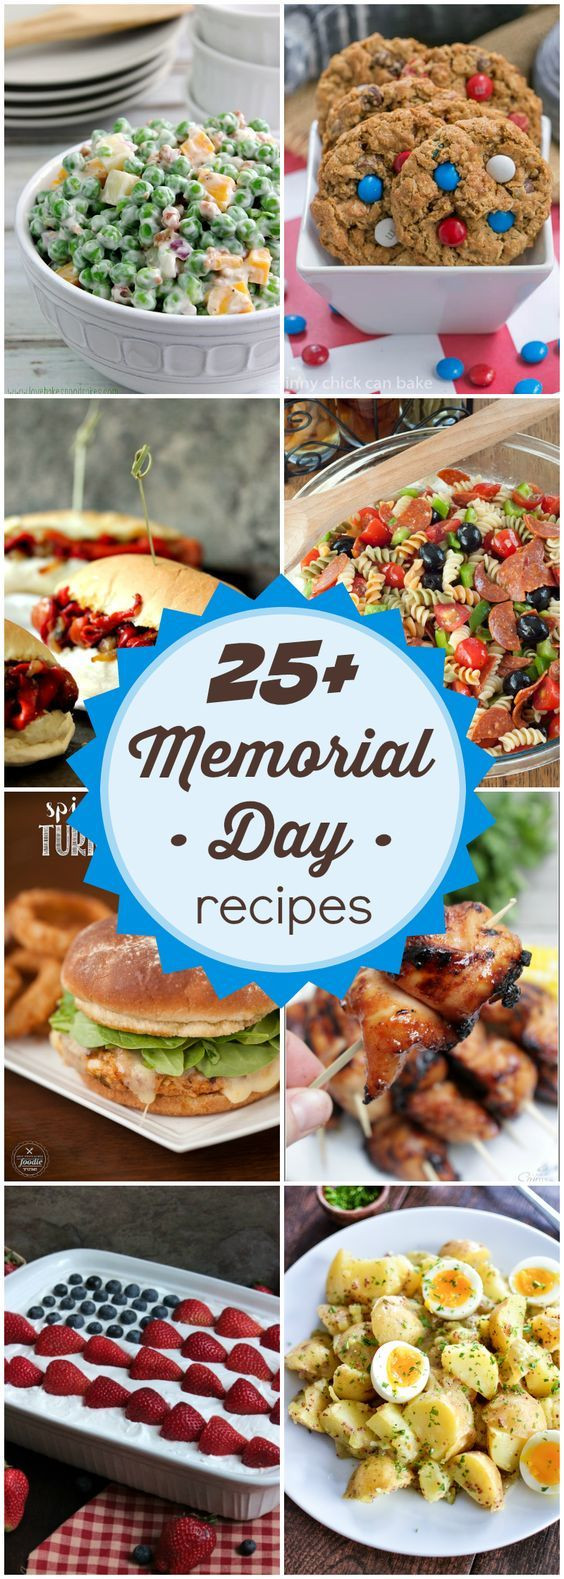 Memorial Day Dinner Ideas
 25 Memorial Day Recipes